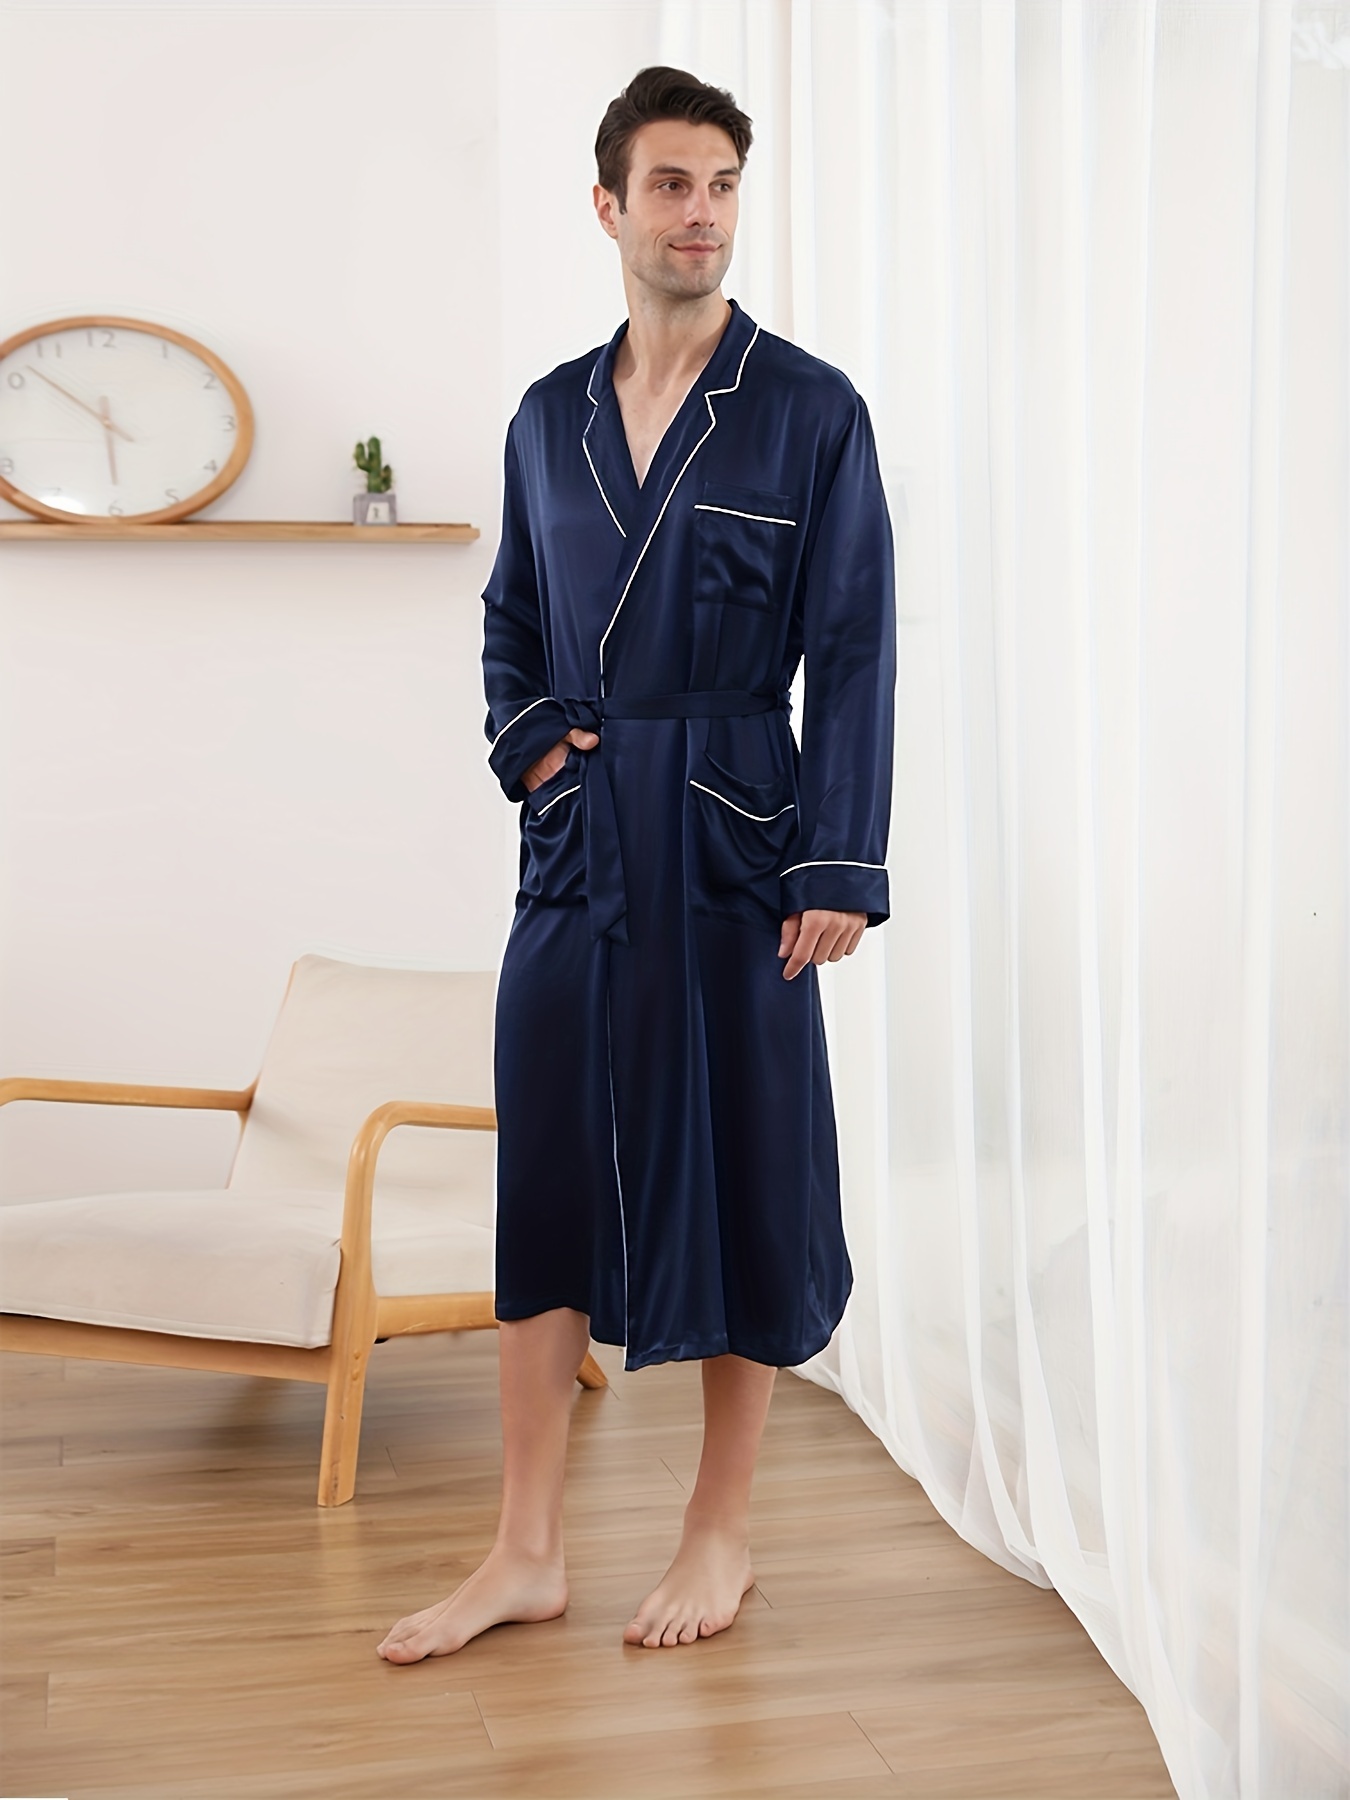 Men's Silk Pajamas Long Sleeved Solid Color Suit Housewear